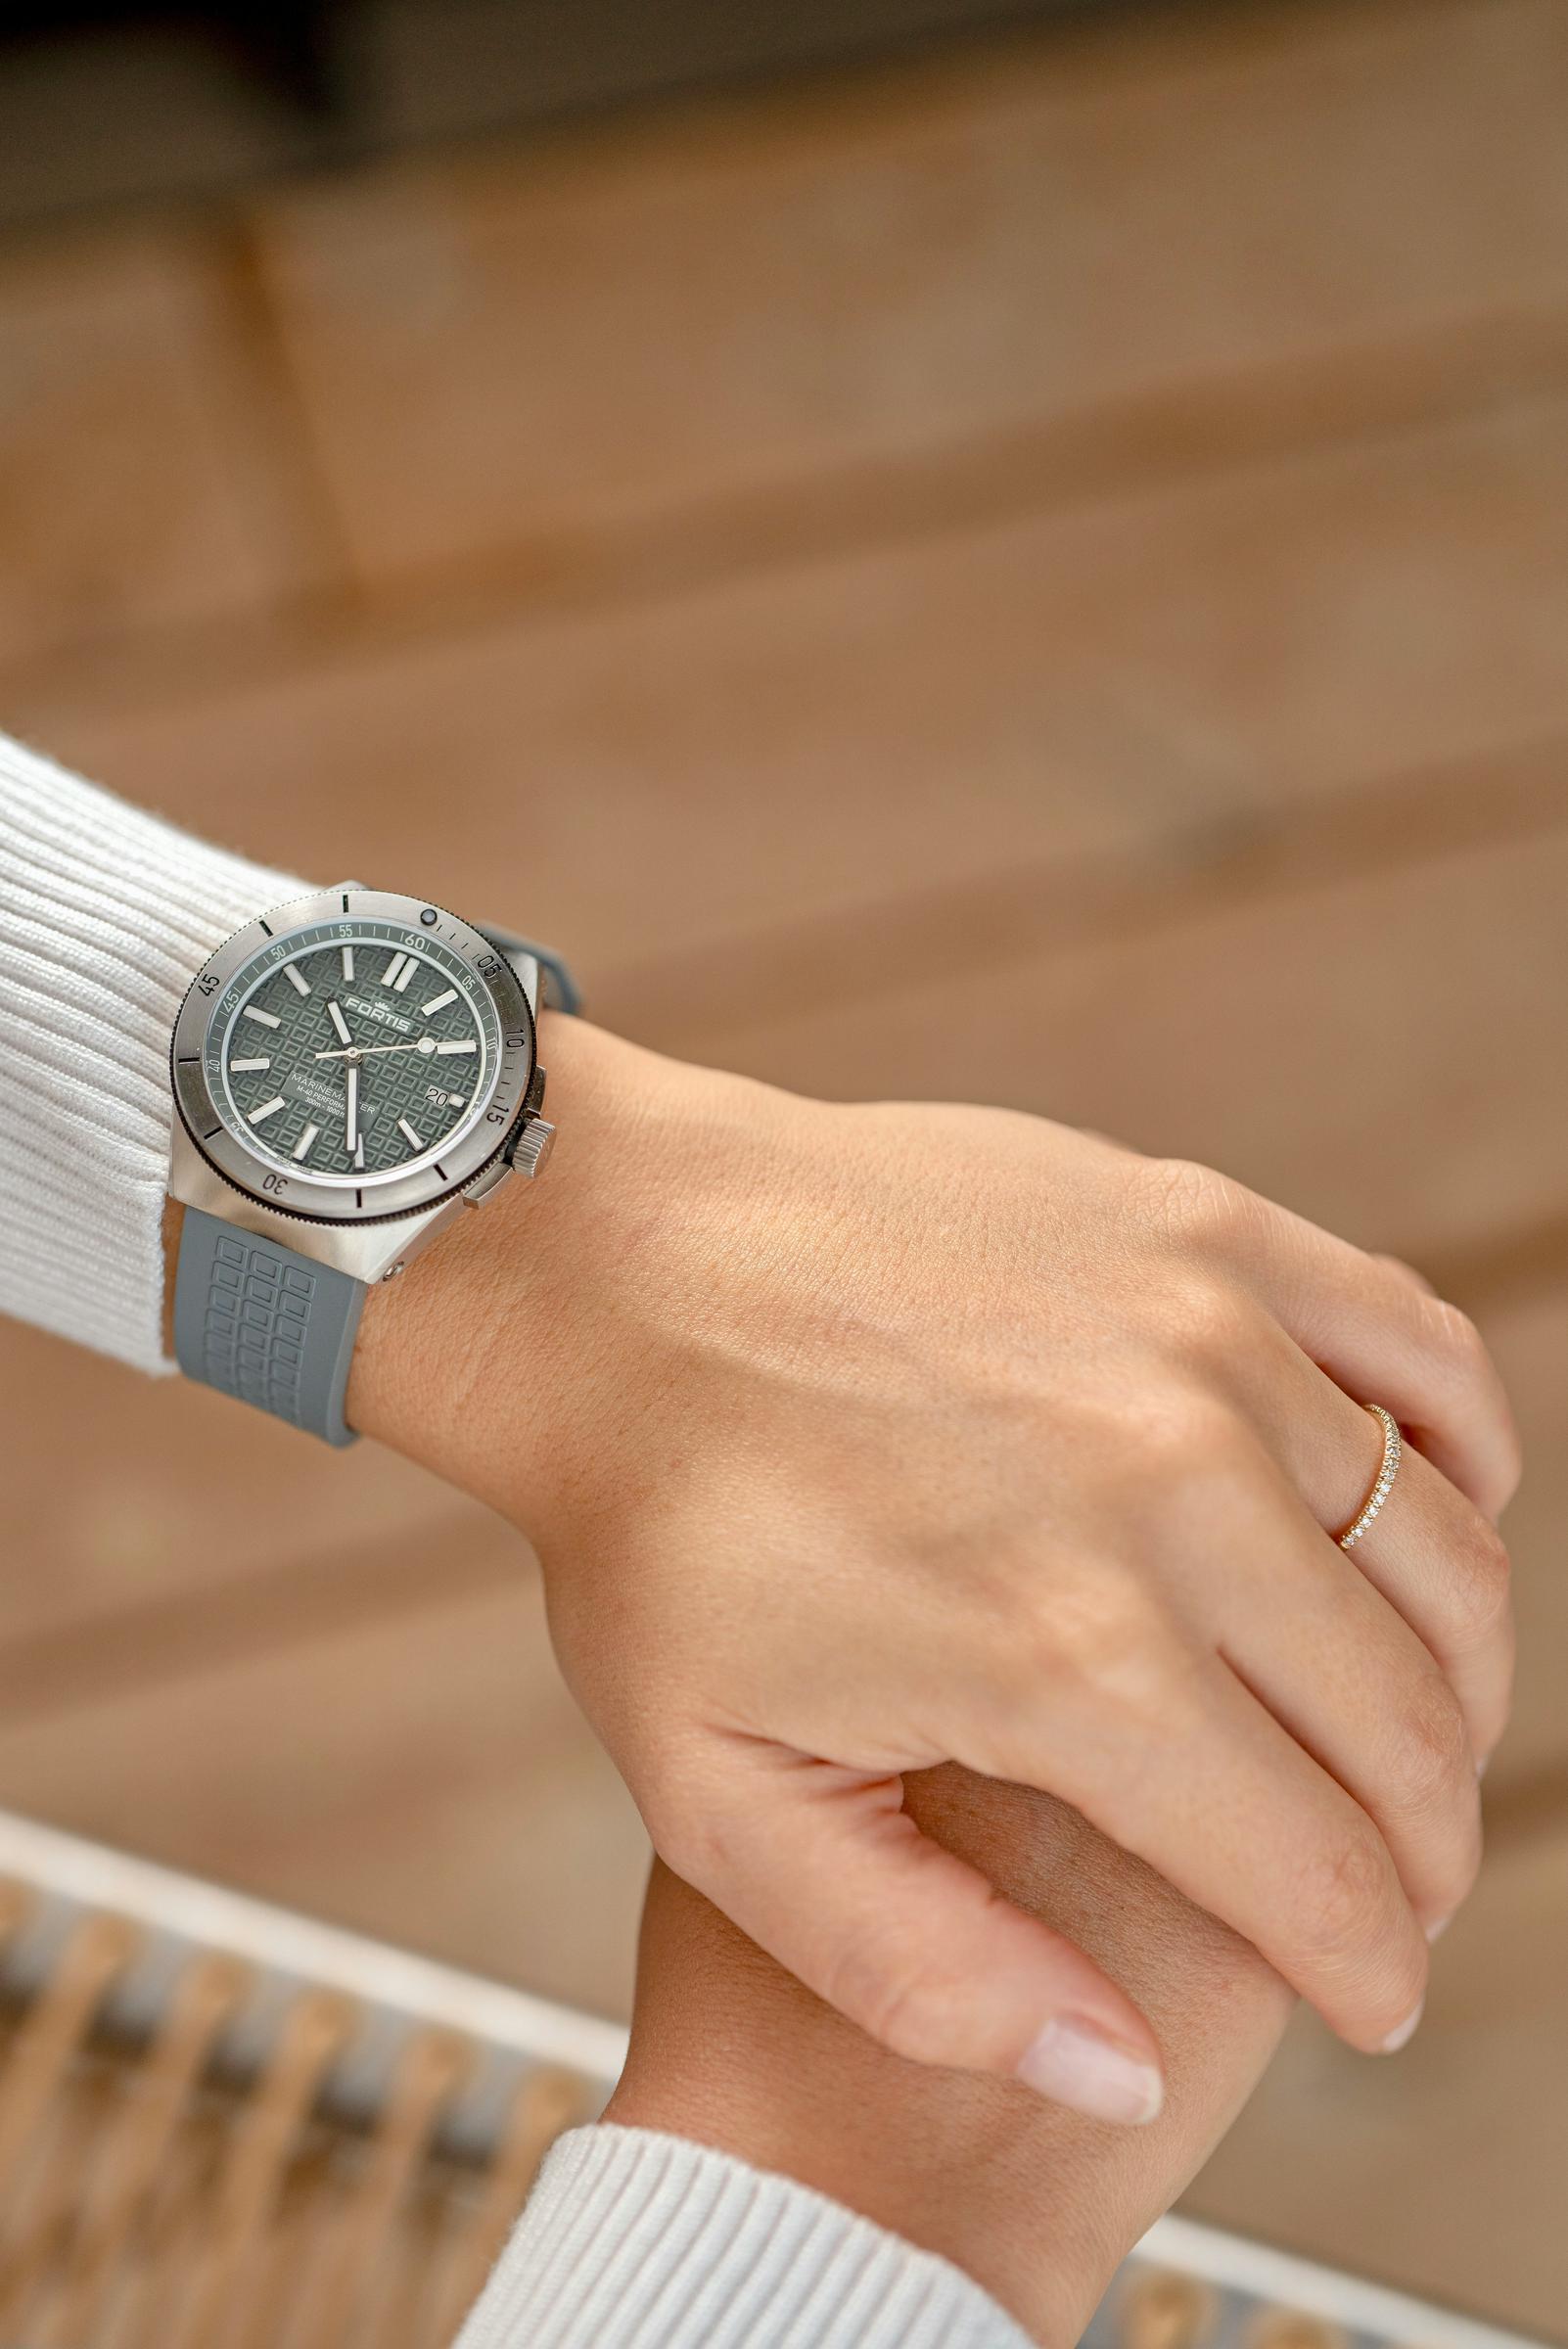 A woman's wrist with a watch on it | Source: Unsplash